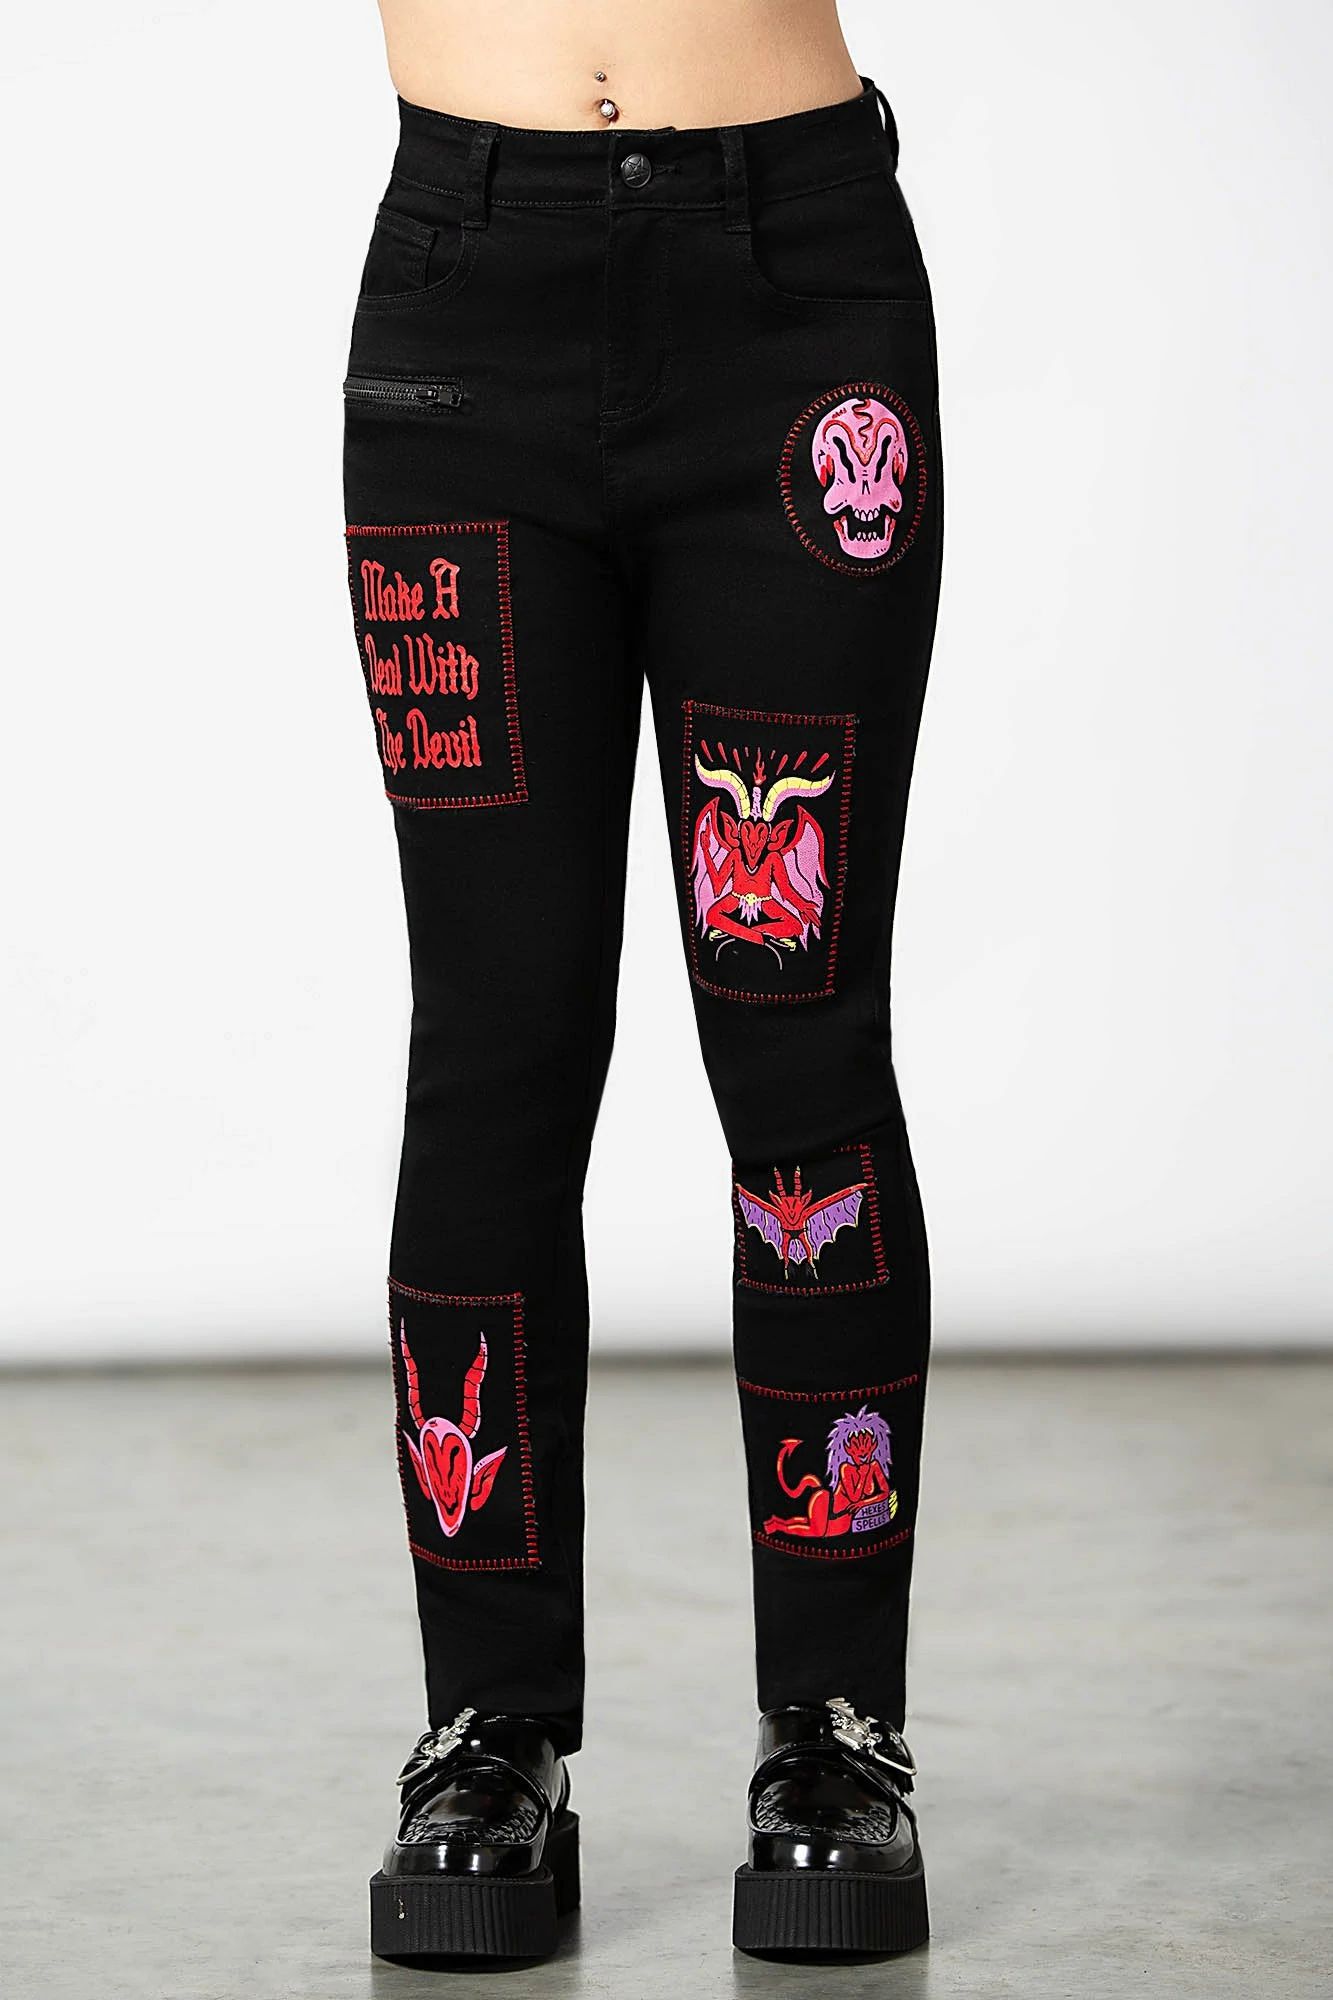 KS04983b_jeans-pantalon-killstar-gothique-rock-slim-dealer-patched